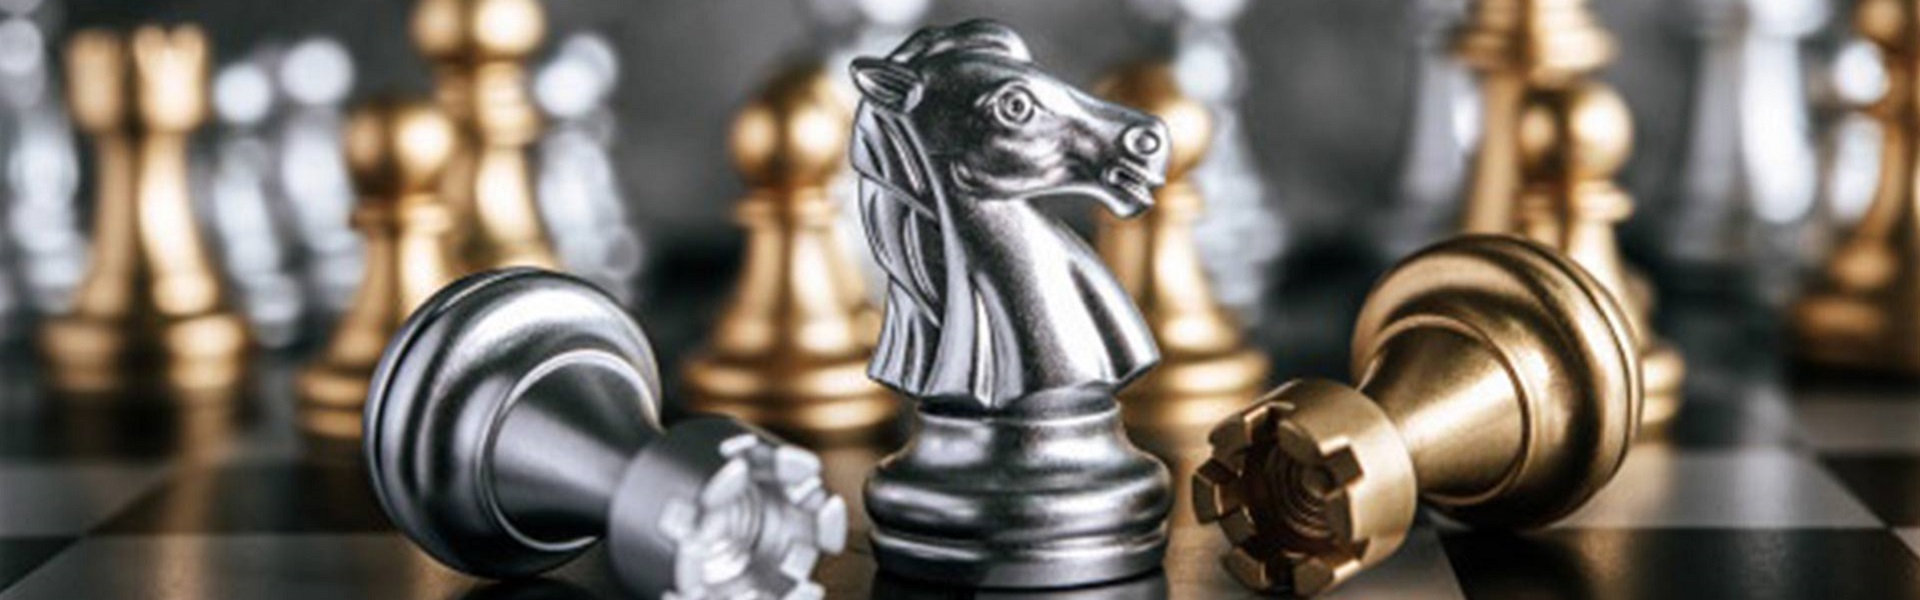 Rent a car Nis |  Chess lessons Dubai & New York